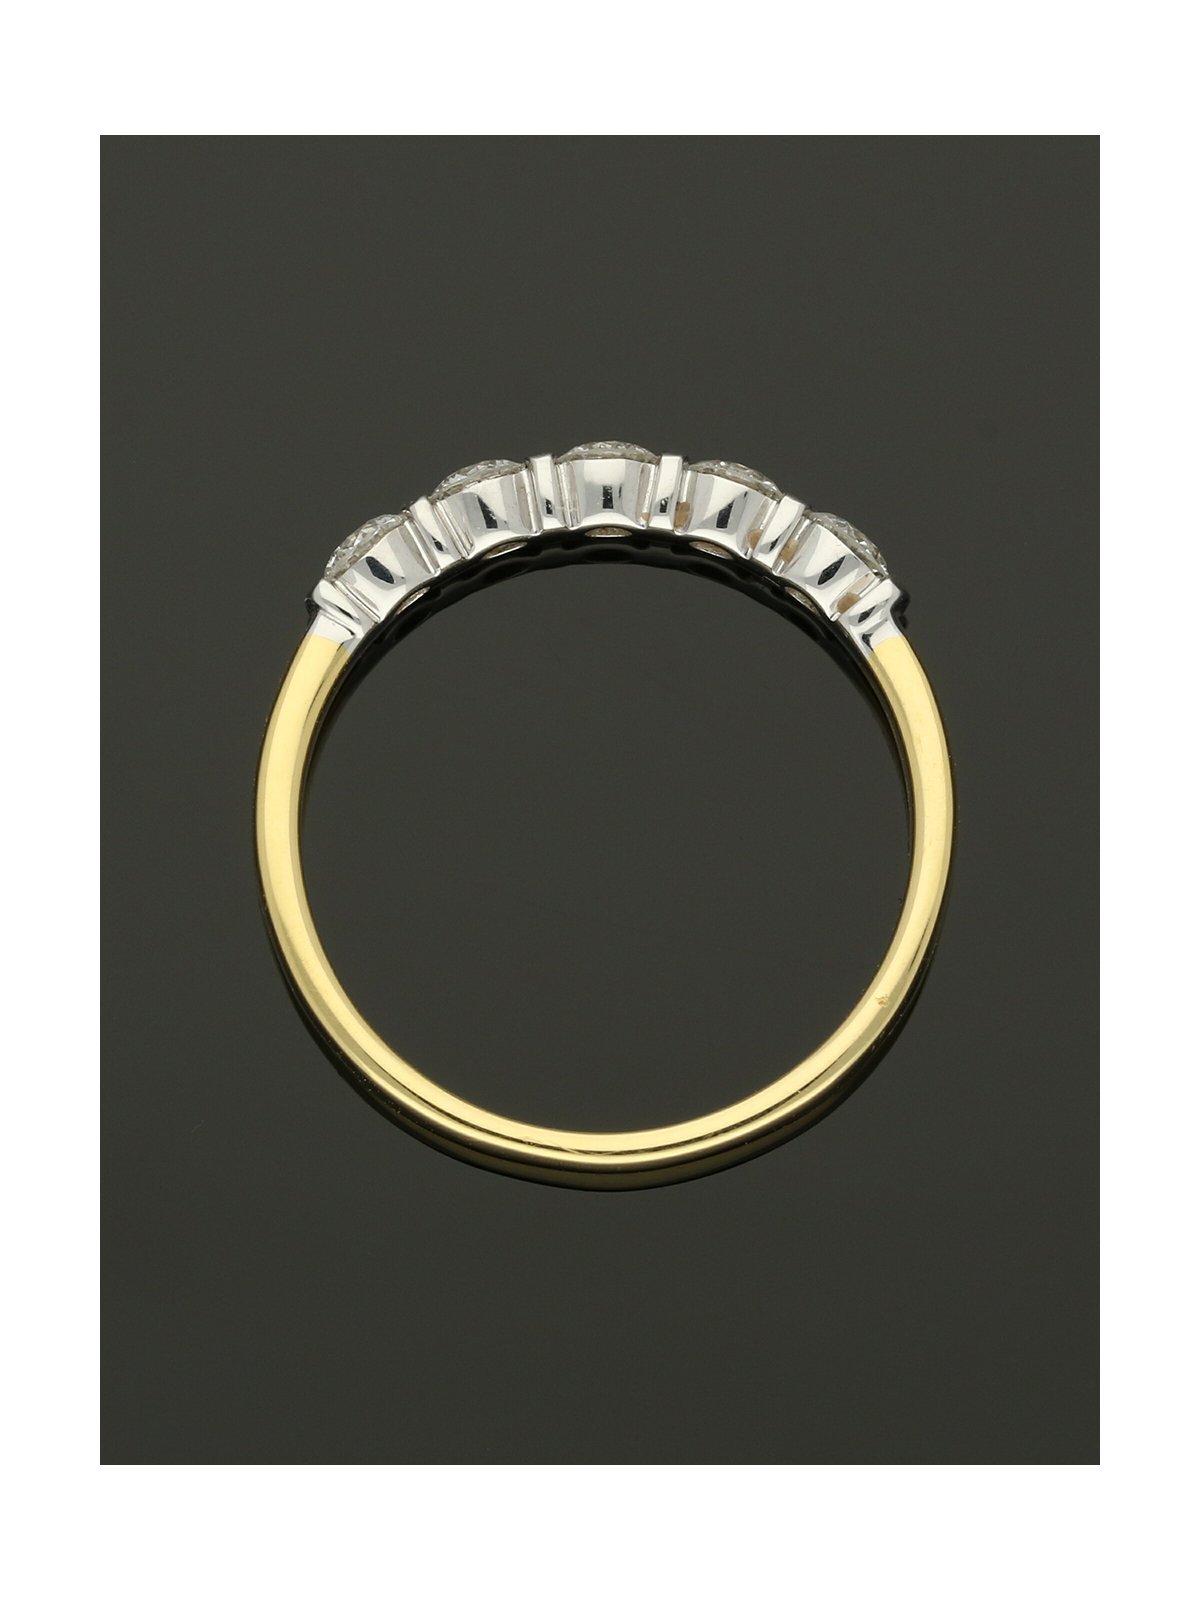 Five Stone Diamond Ring 0.50ct Round Brilliant Cut in 18ct Yellow & White Gold